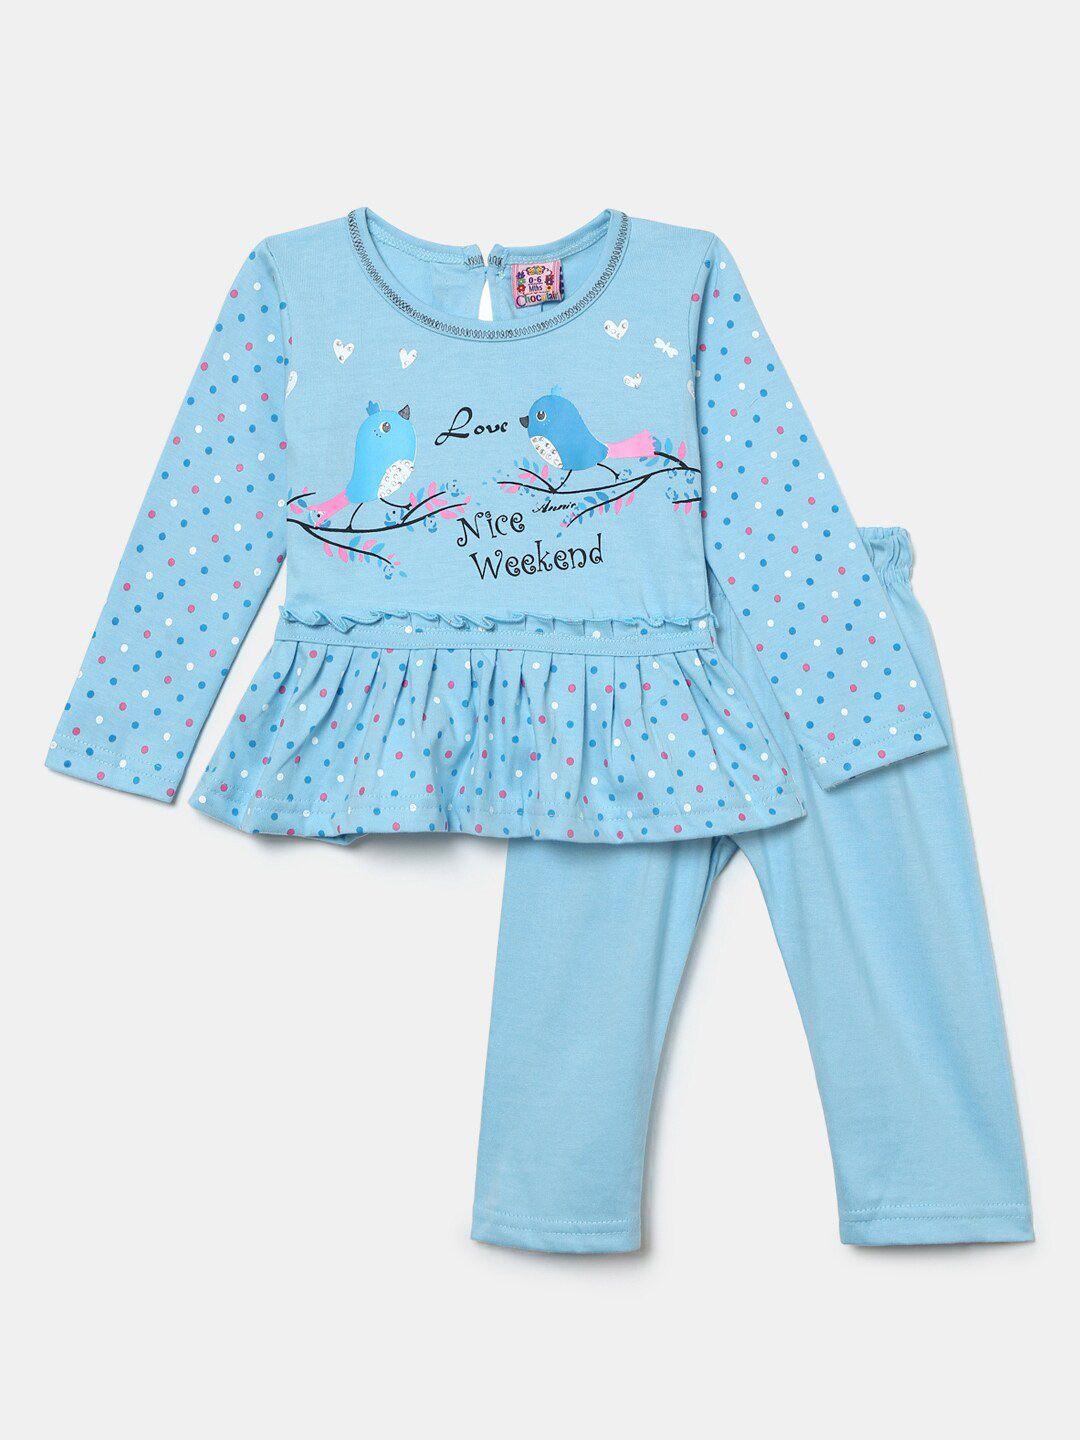 v-mart kids blue & white printed pure cotton top with pyjama